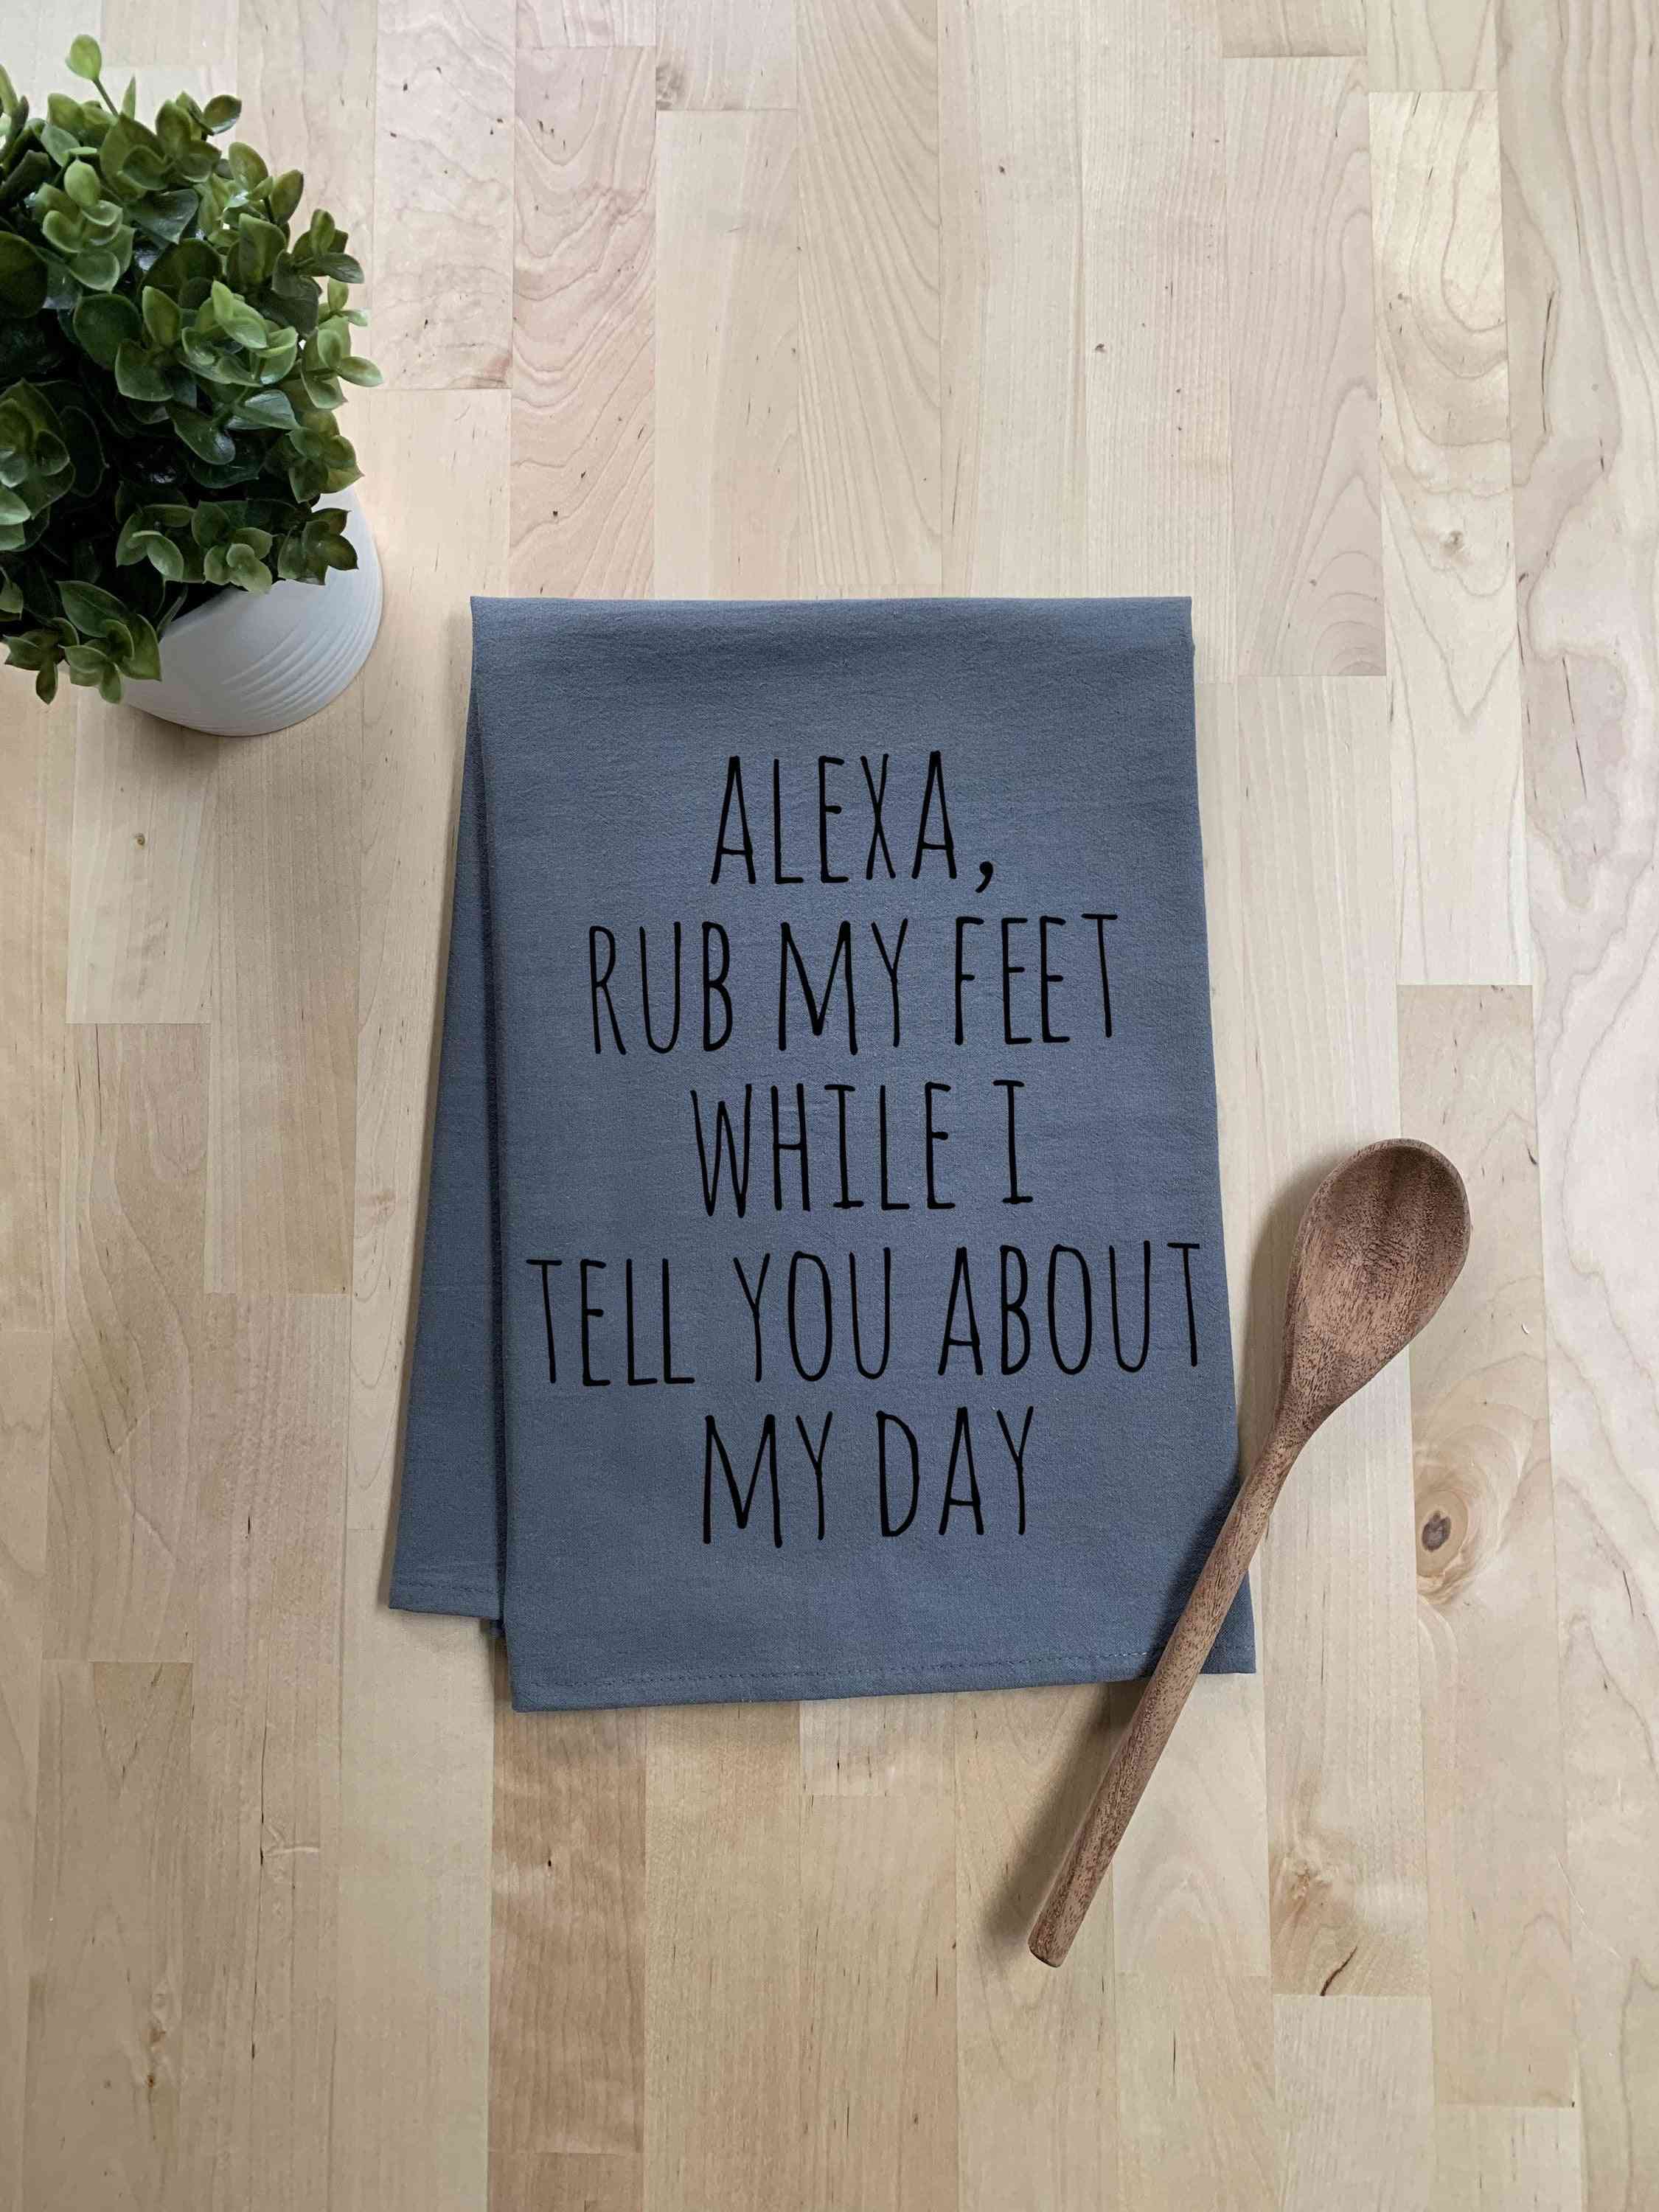 Alexa Rub My Feet Dish Towel